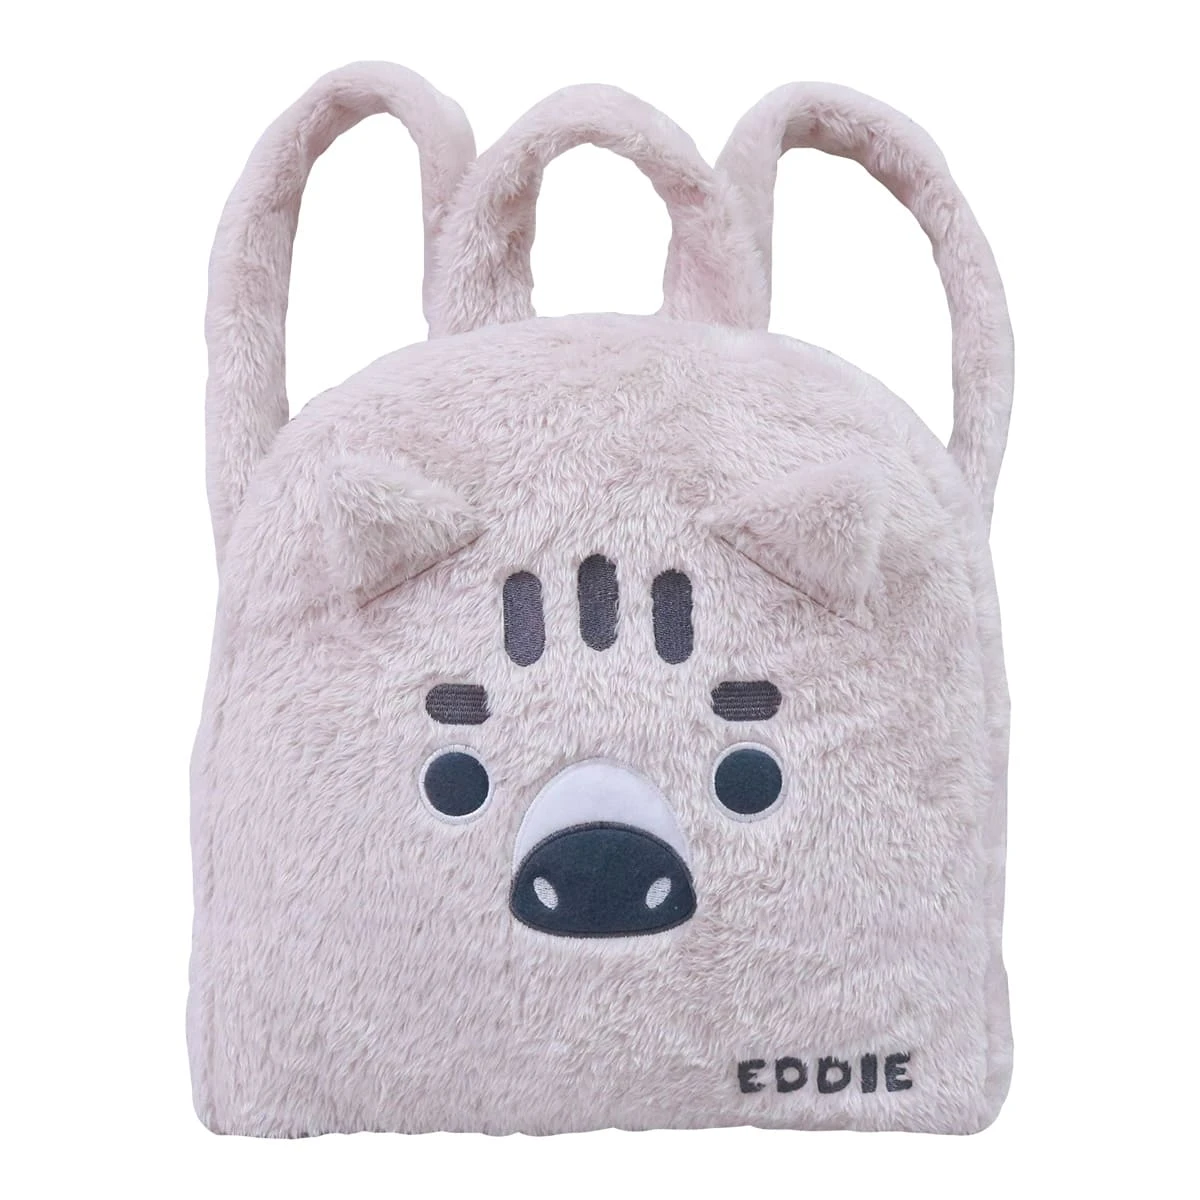 Eddie V2 3D Embroidery Plush Backpack Blanket (Grey)